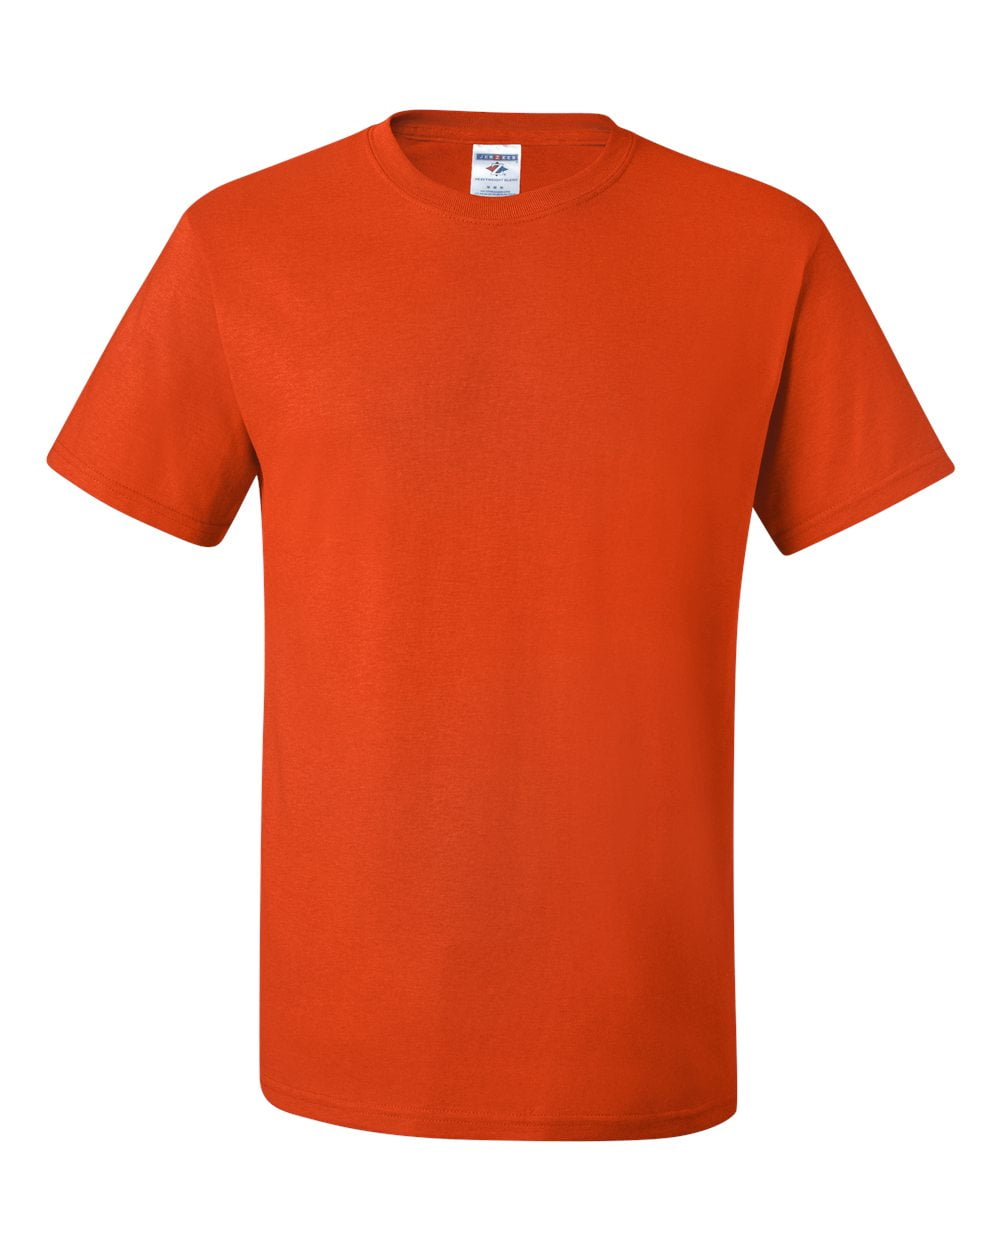 orange t shirt walmart